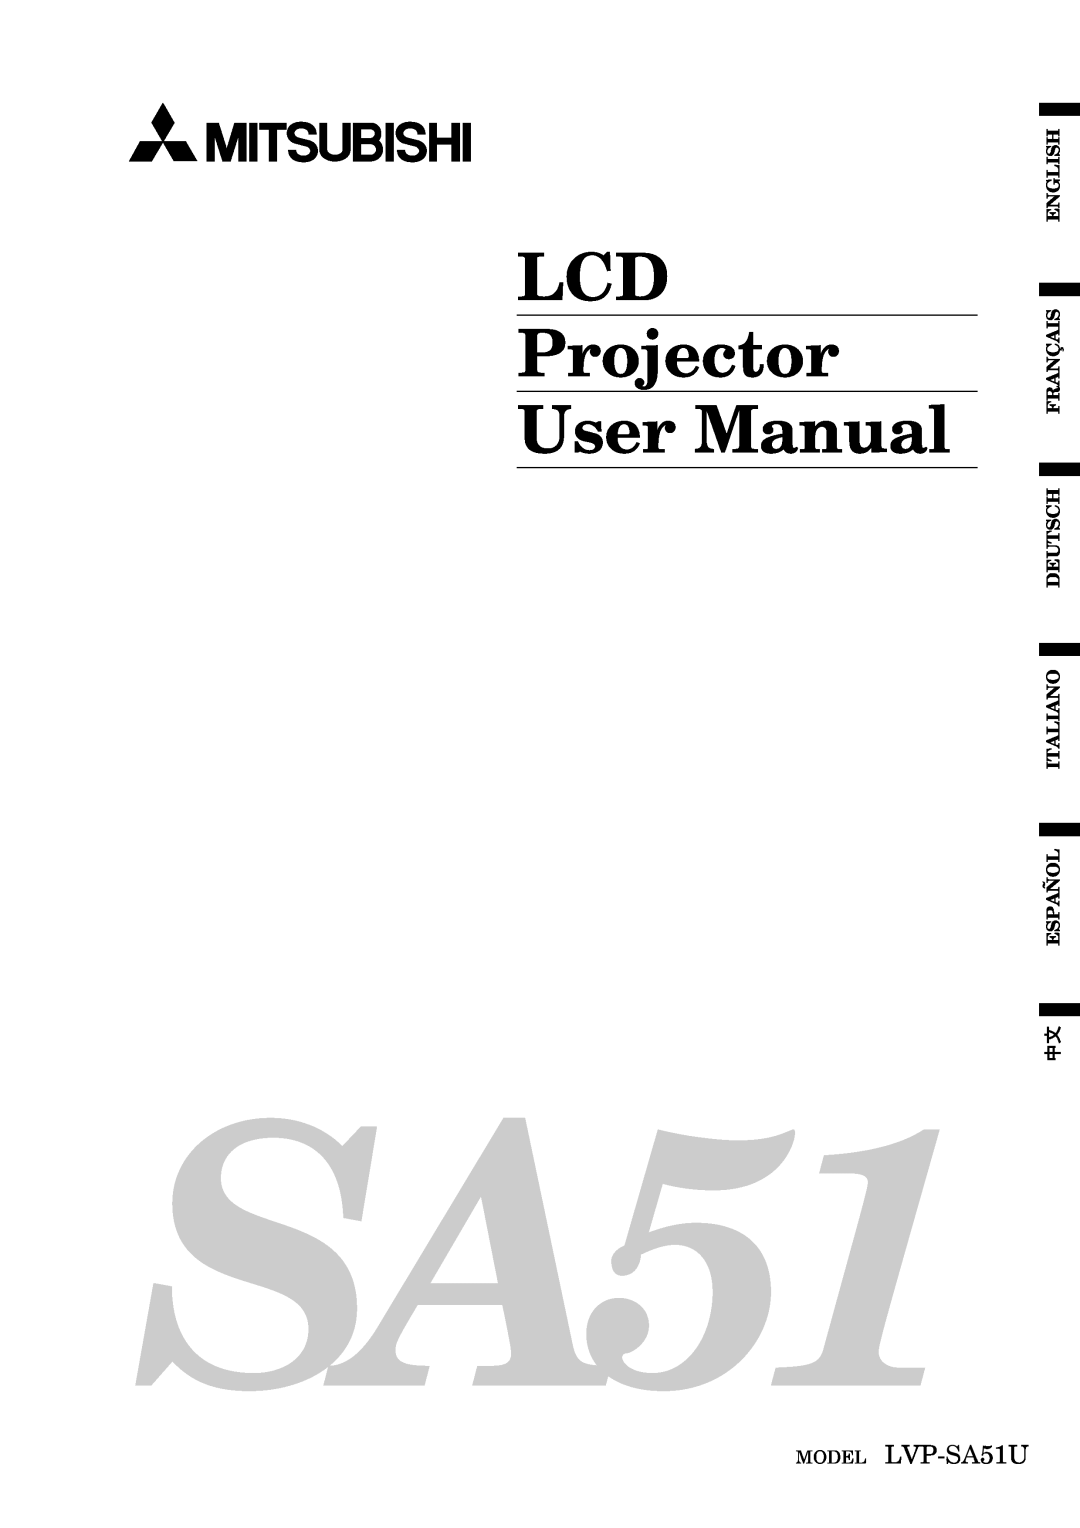 Mitsubishi Electronics user manual MODEL LVP-SA51U, LCD Projector User Manual 